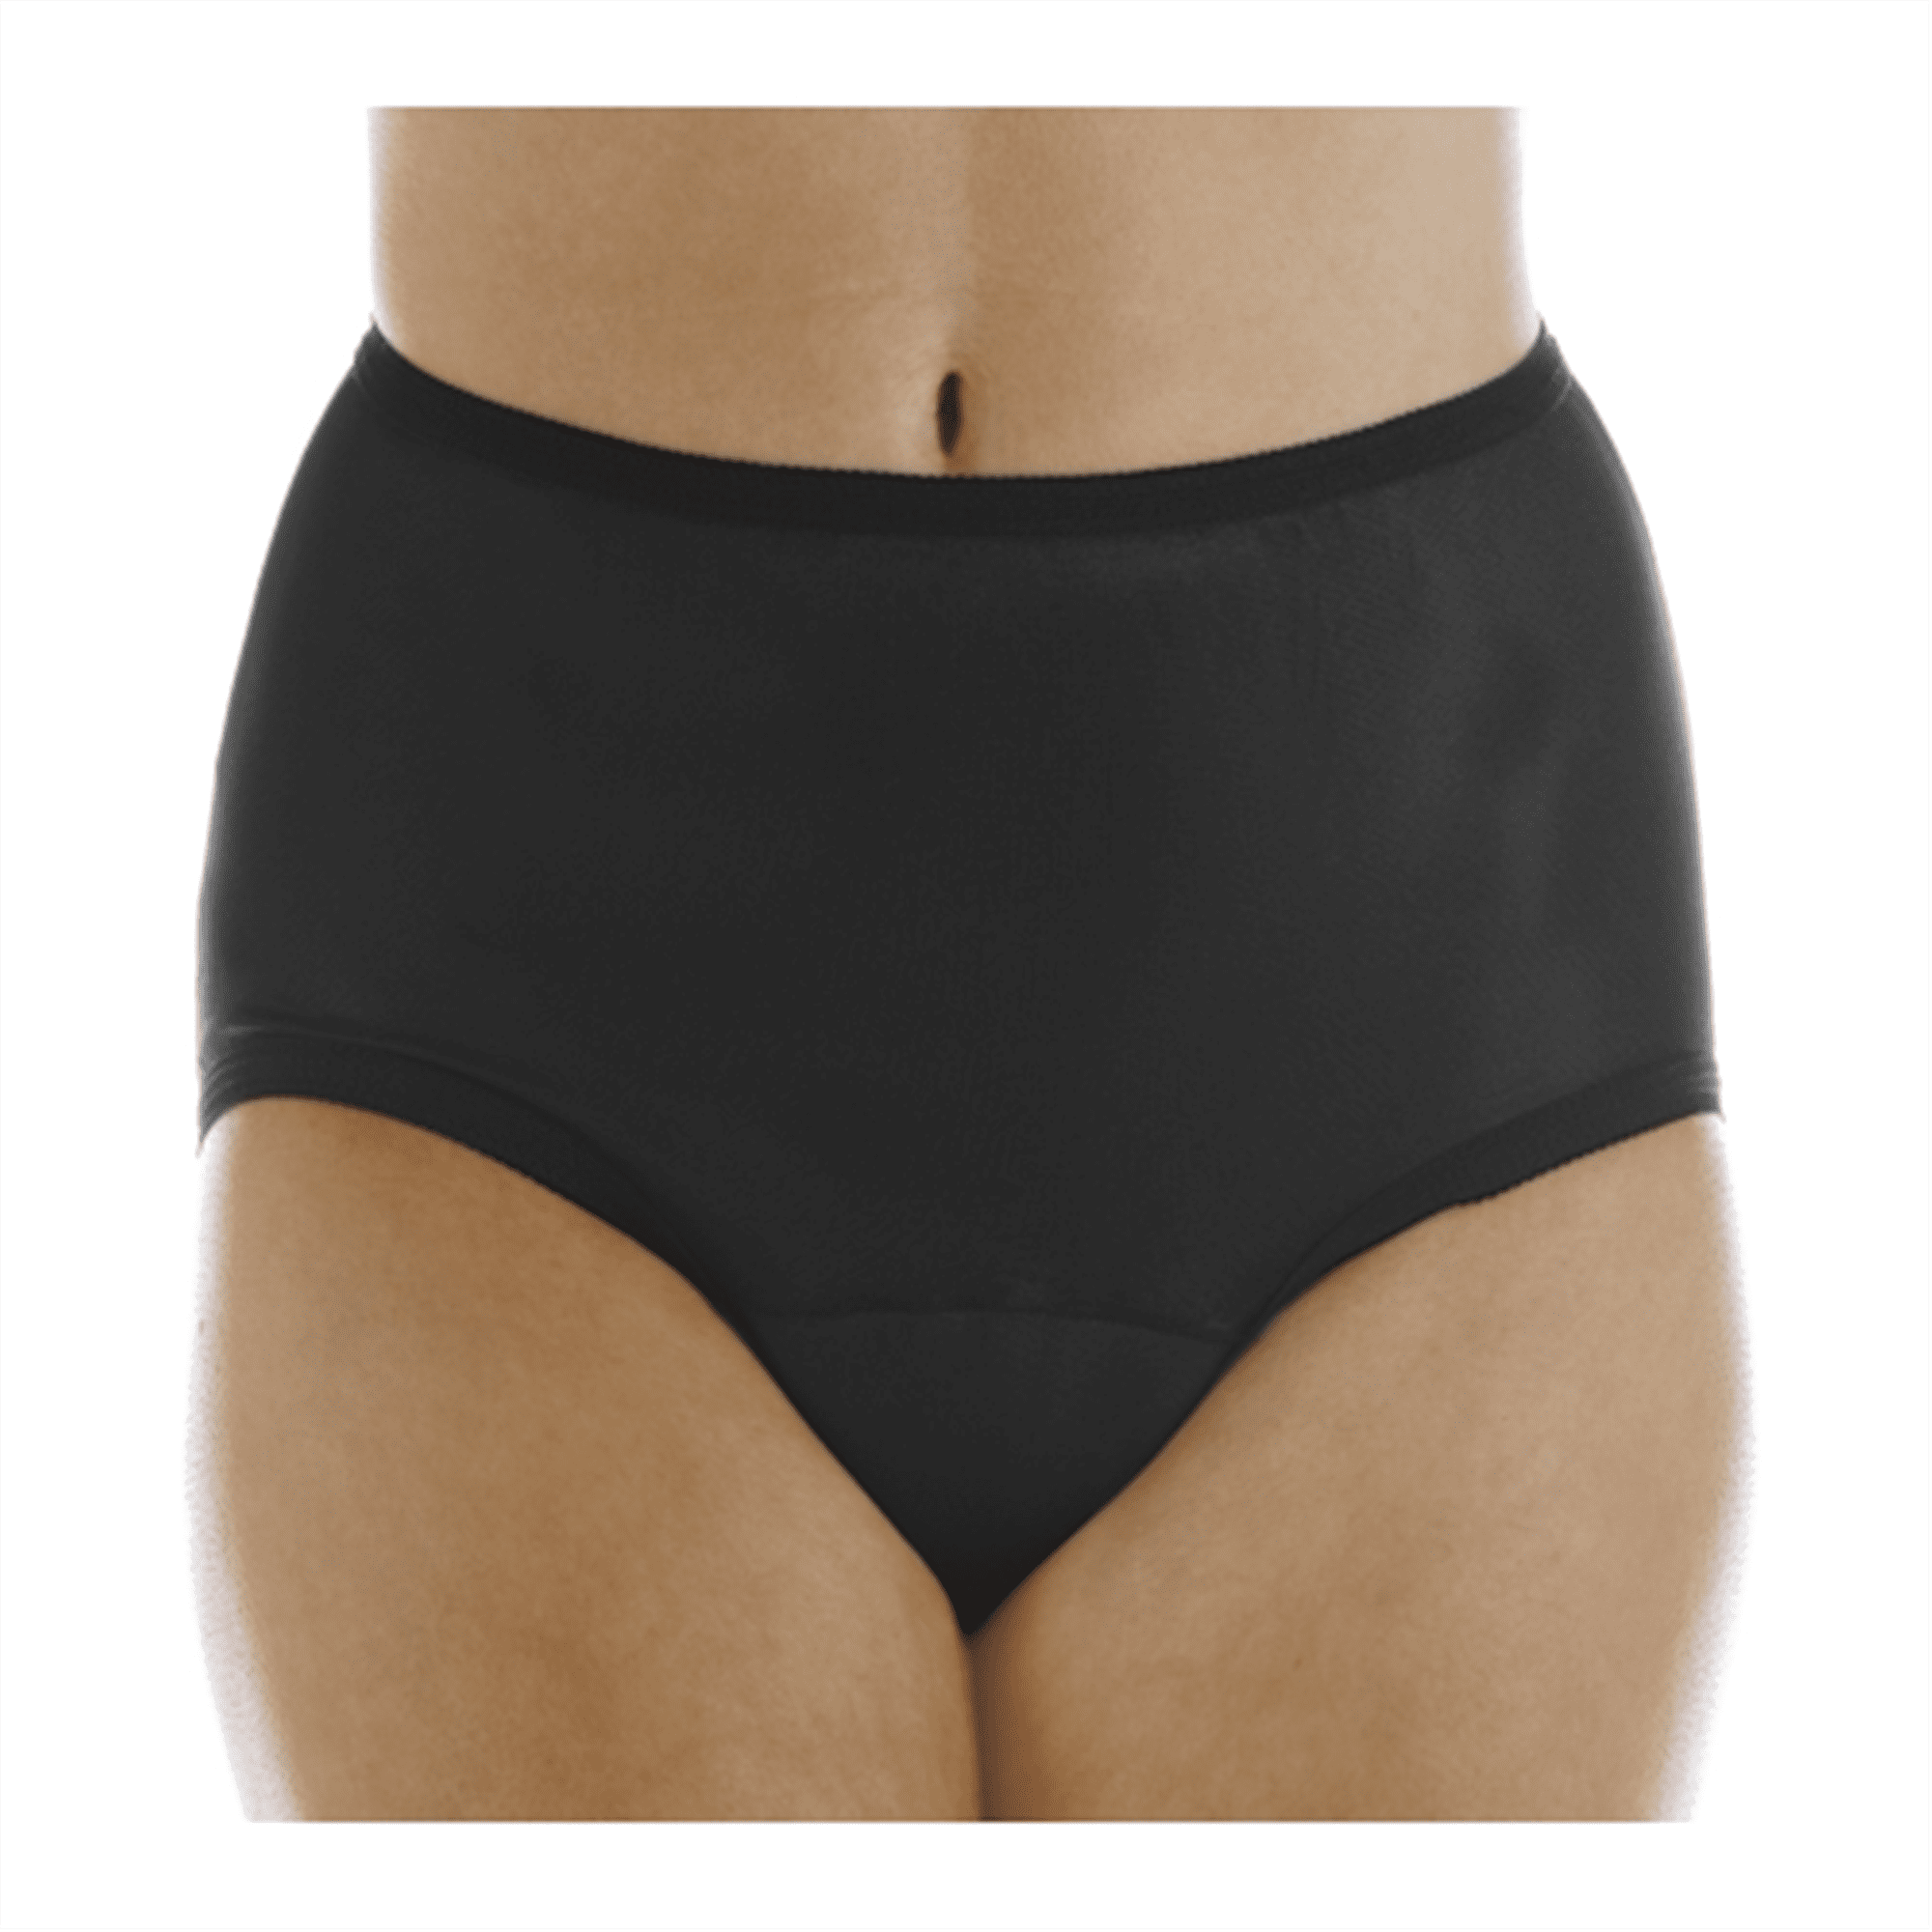 1-Pack Wearever Women's Nylon Incontinence Panties Black 1X (Fits